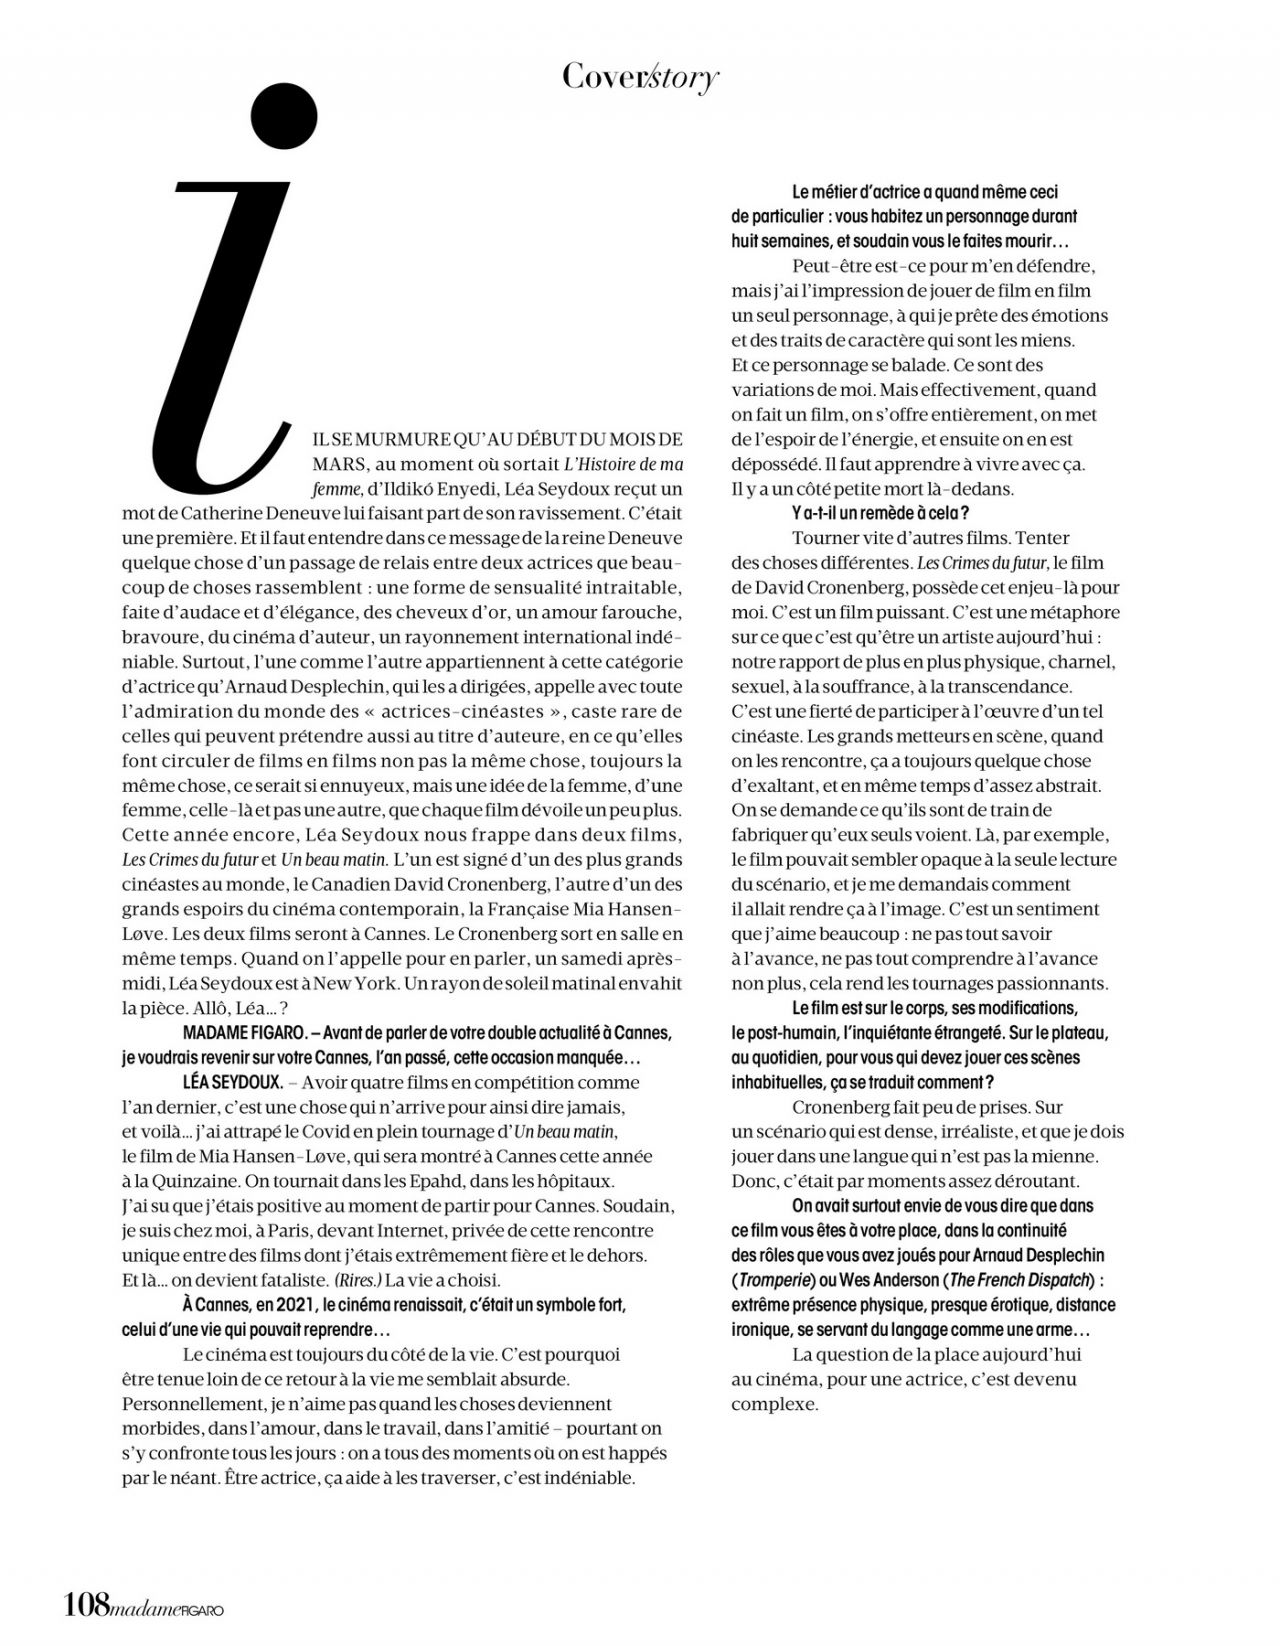 Léa Seydoux Daily — Léa Seydoux in Madame Figaro May 13th, 2022 by